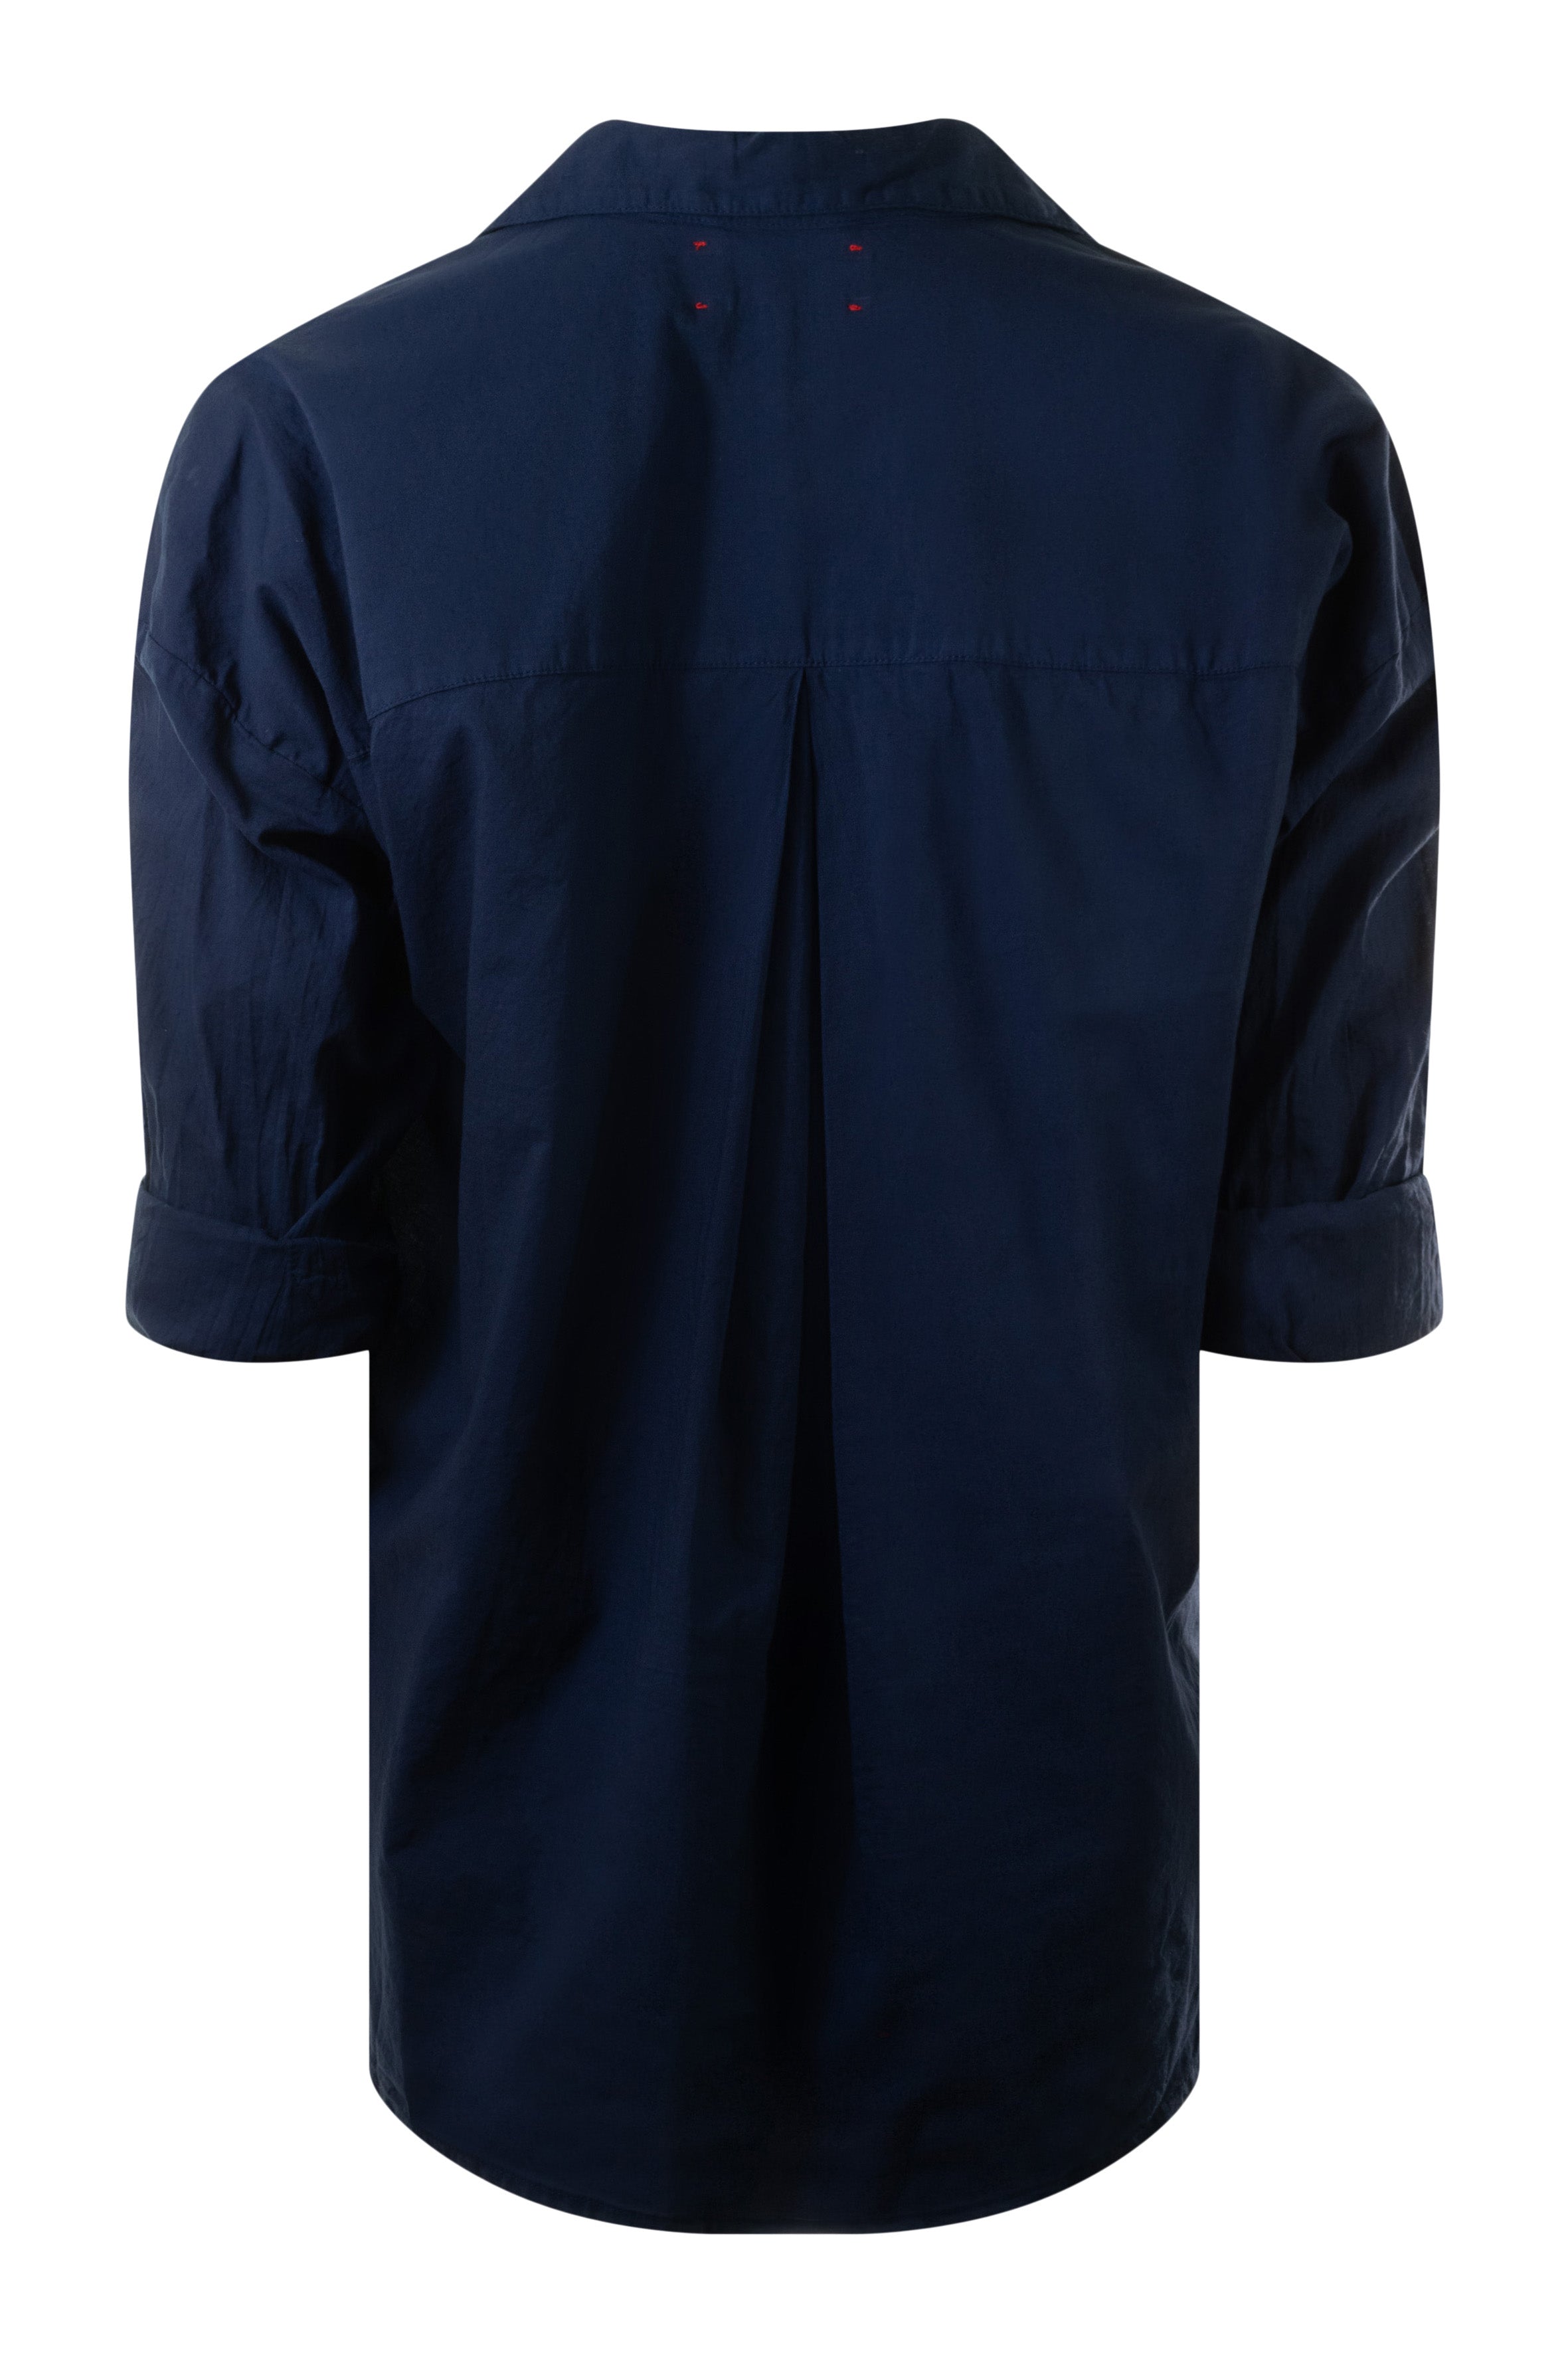 Xirena Jace Shirt in Navy